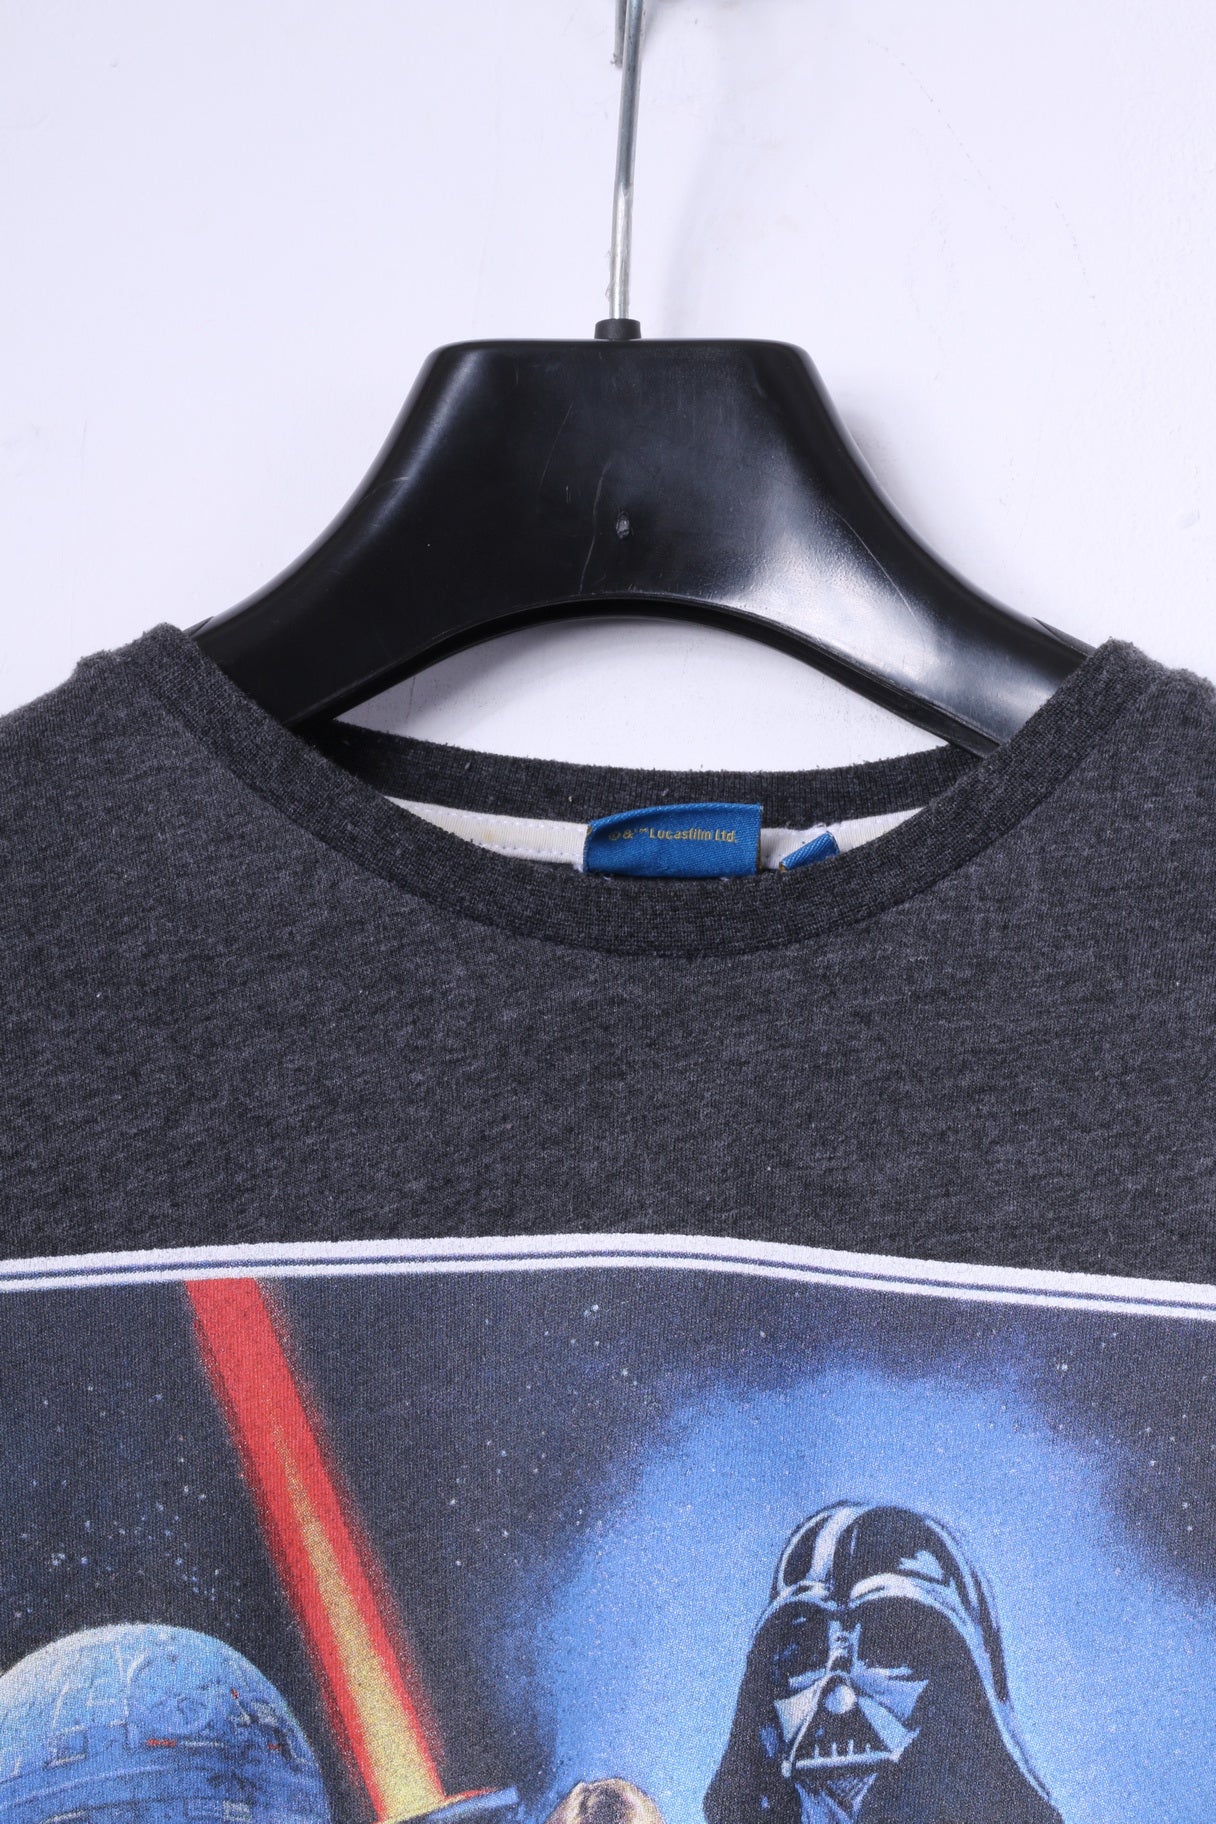 Star Wars Mens XS T-Shirt Grey Slim Fit Graphic Movie Top